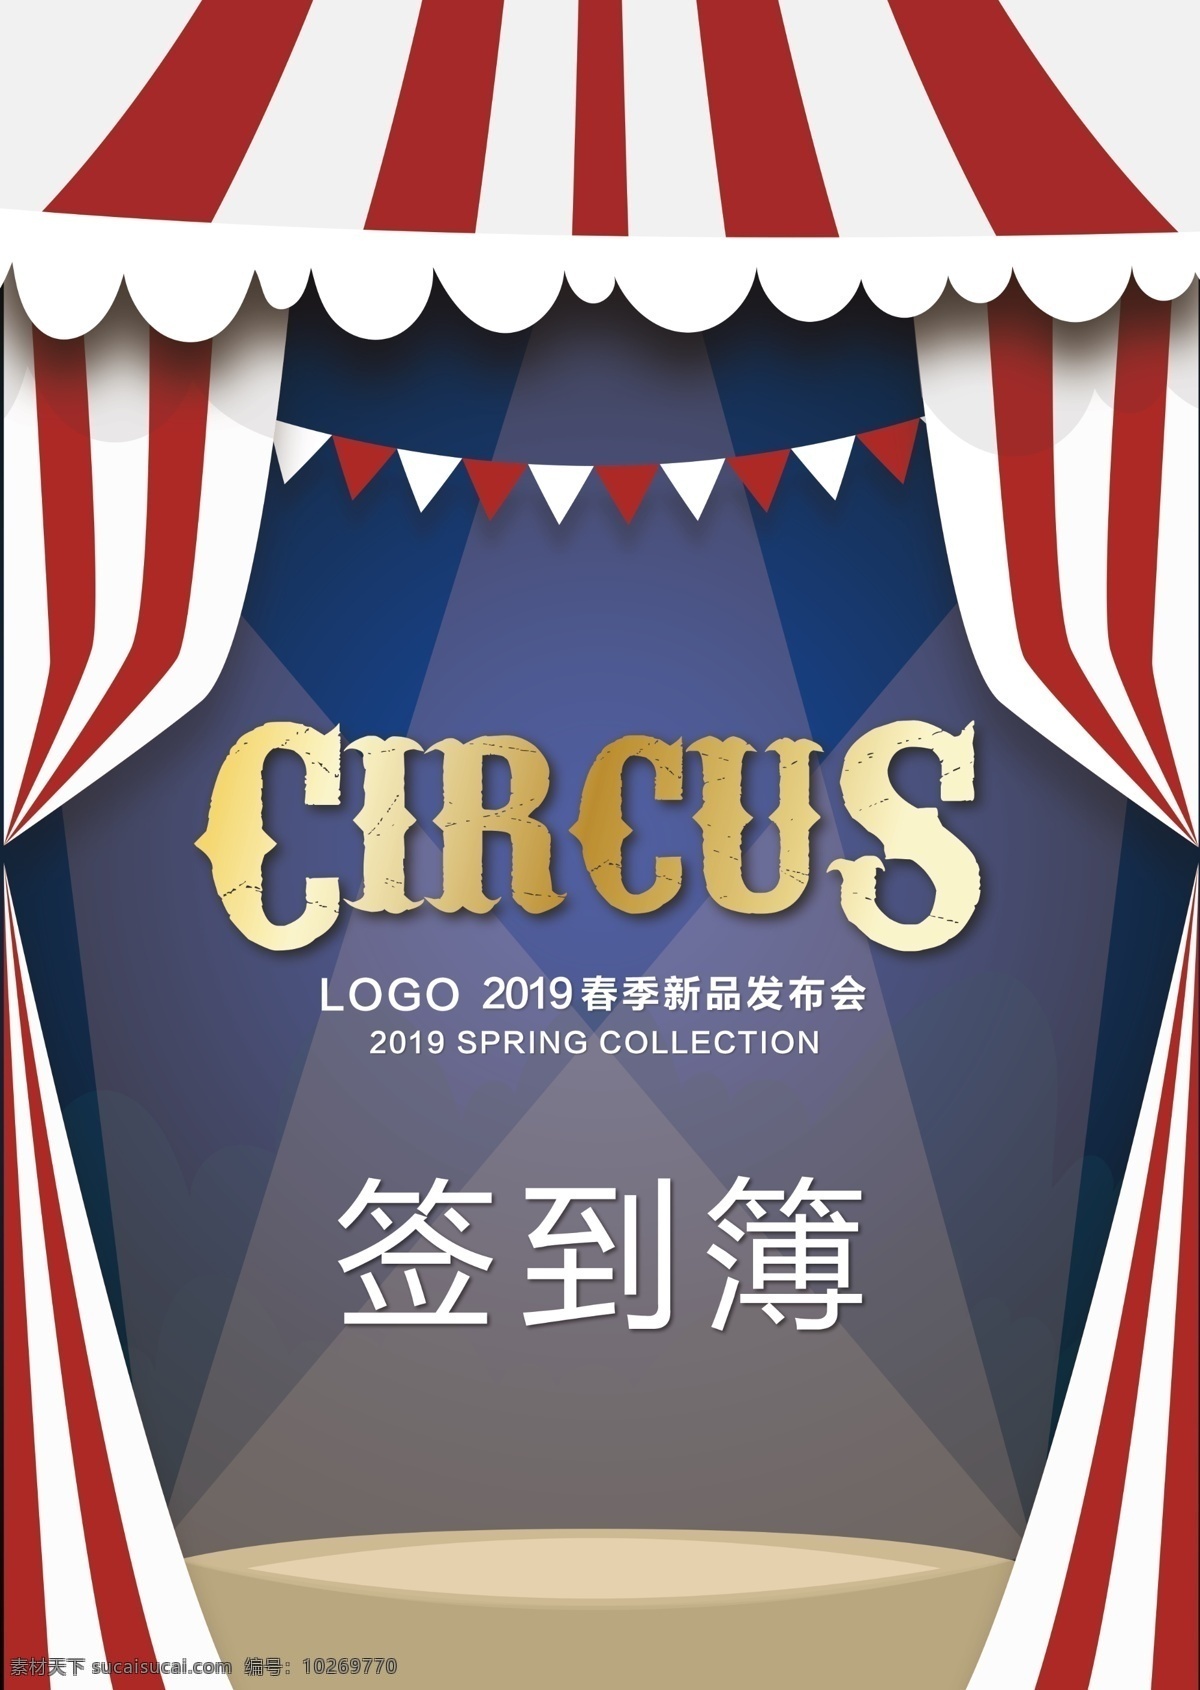 circus 主题 大 马戏 发布会 签到簿 马戏团 签到处 大马戏 招待台